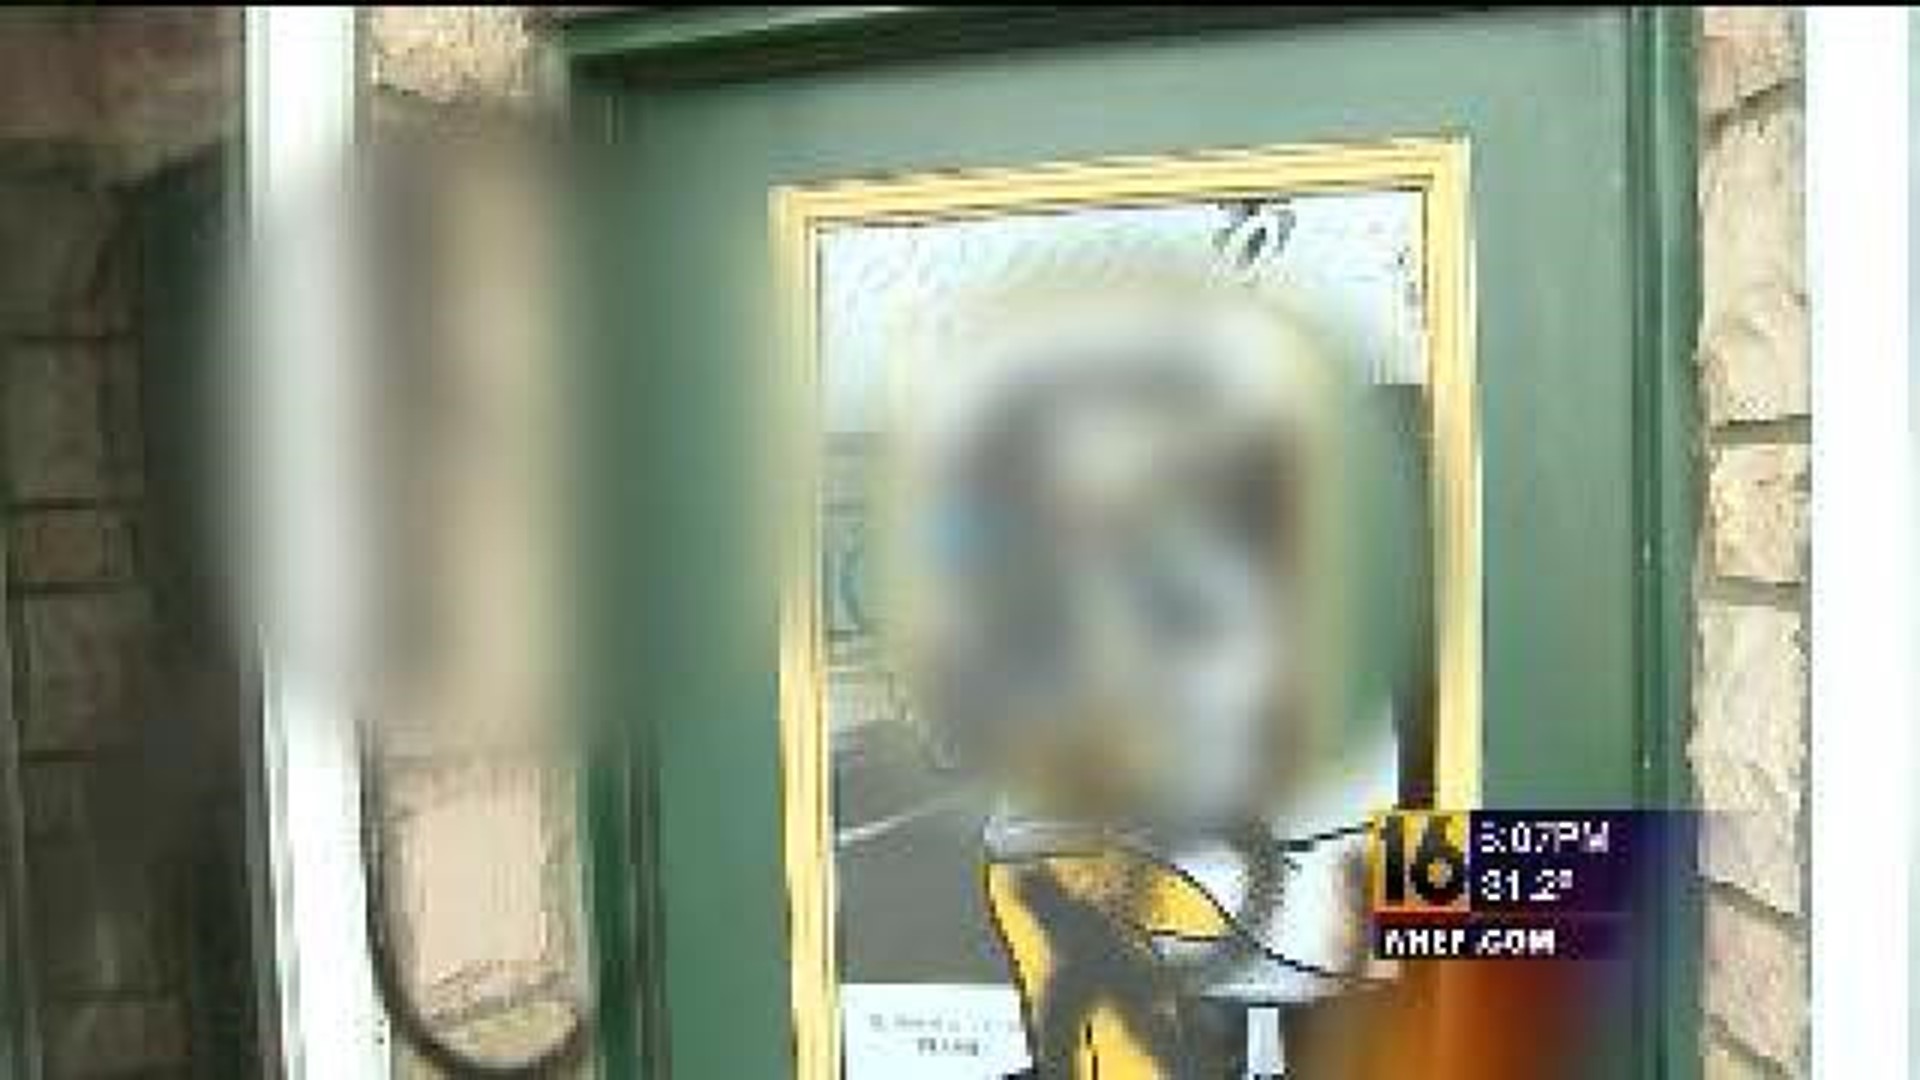 Police in Luzerne County Investigating Vandalism